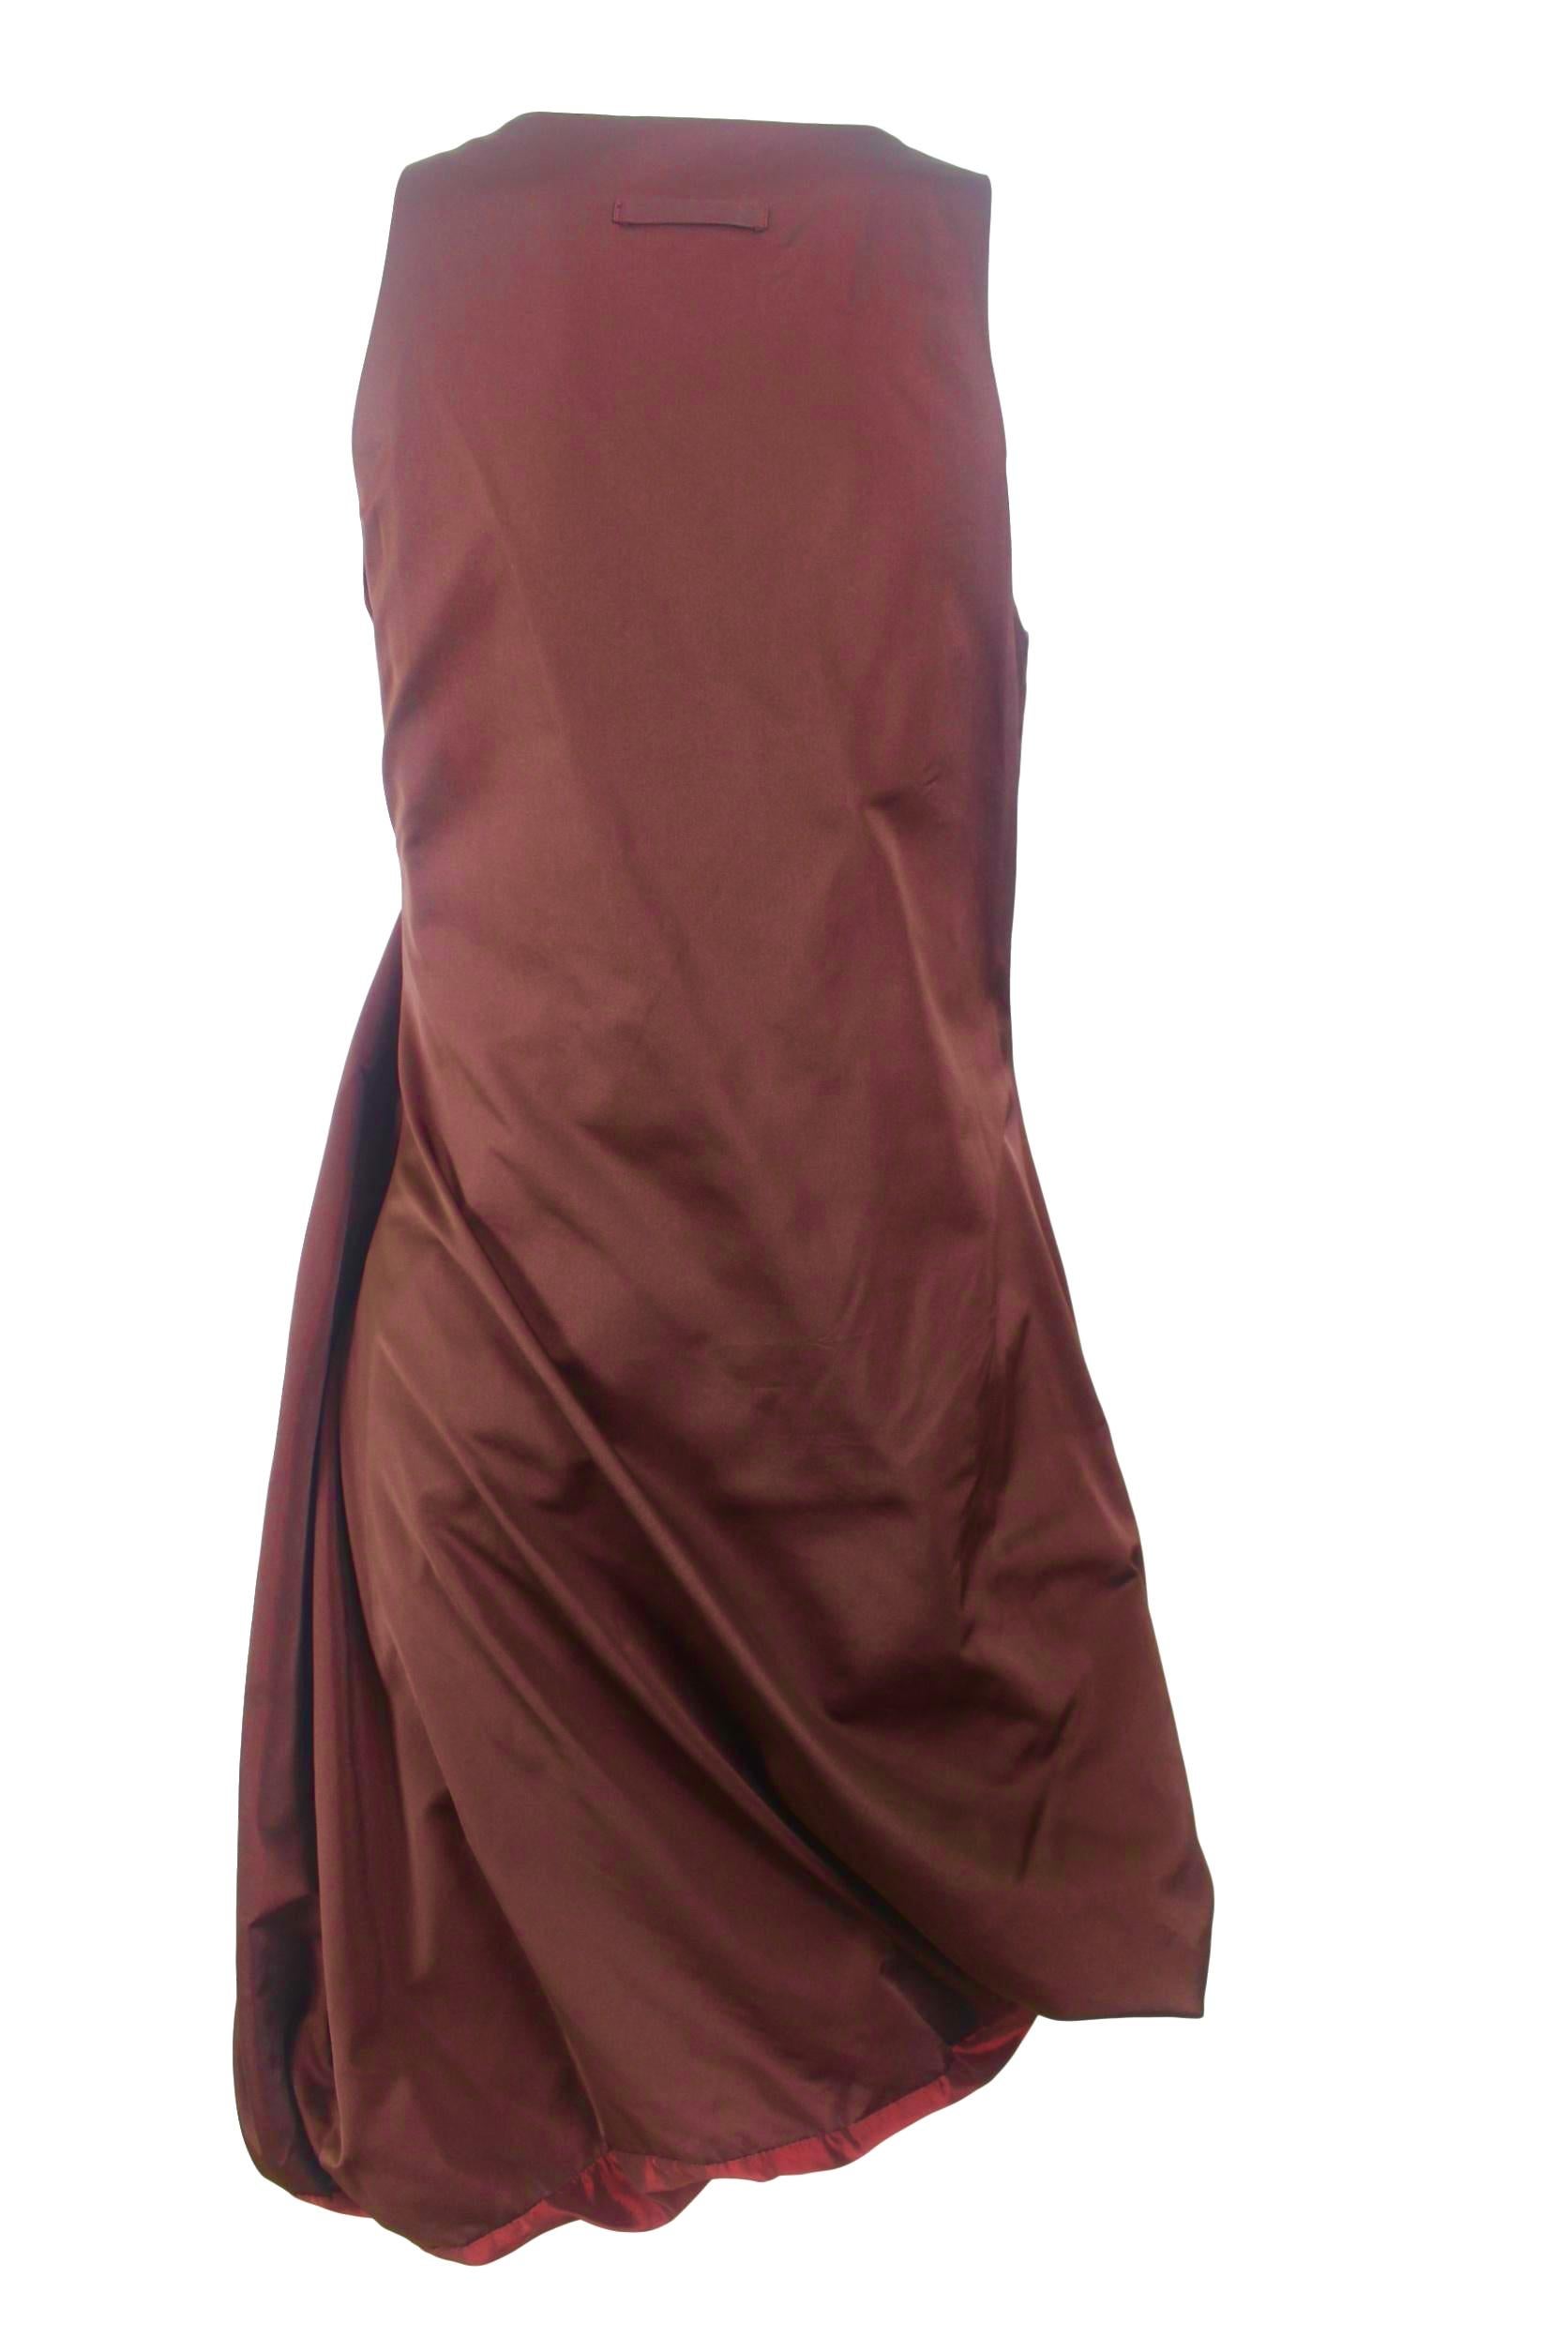 Jean Paul Gaultier Classique Label Bronze Satin Balloon Dress Spring/Summer 2003 For Sale 6